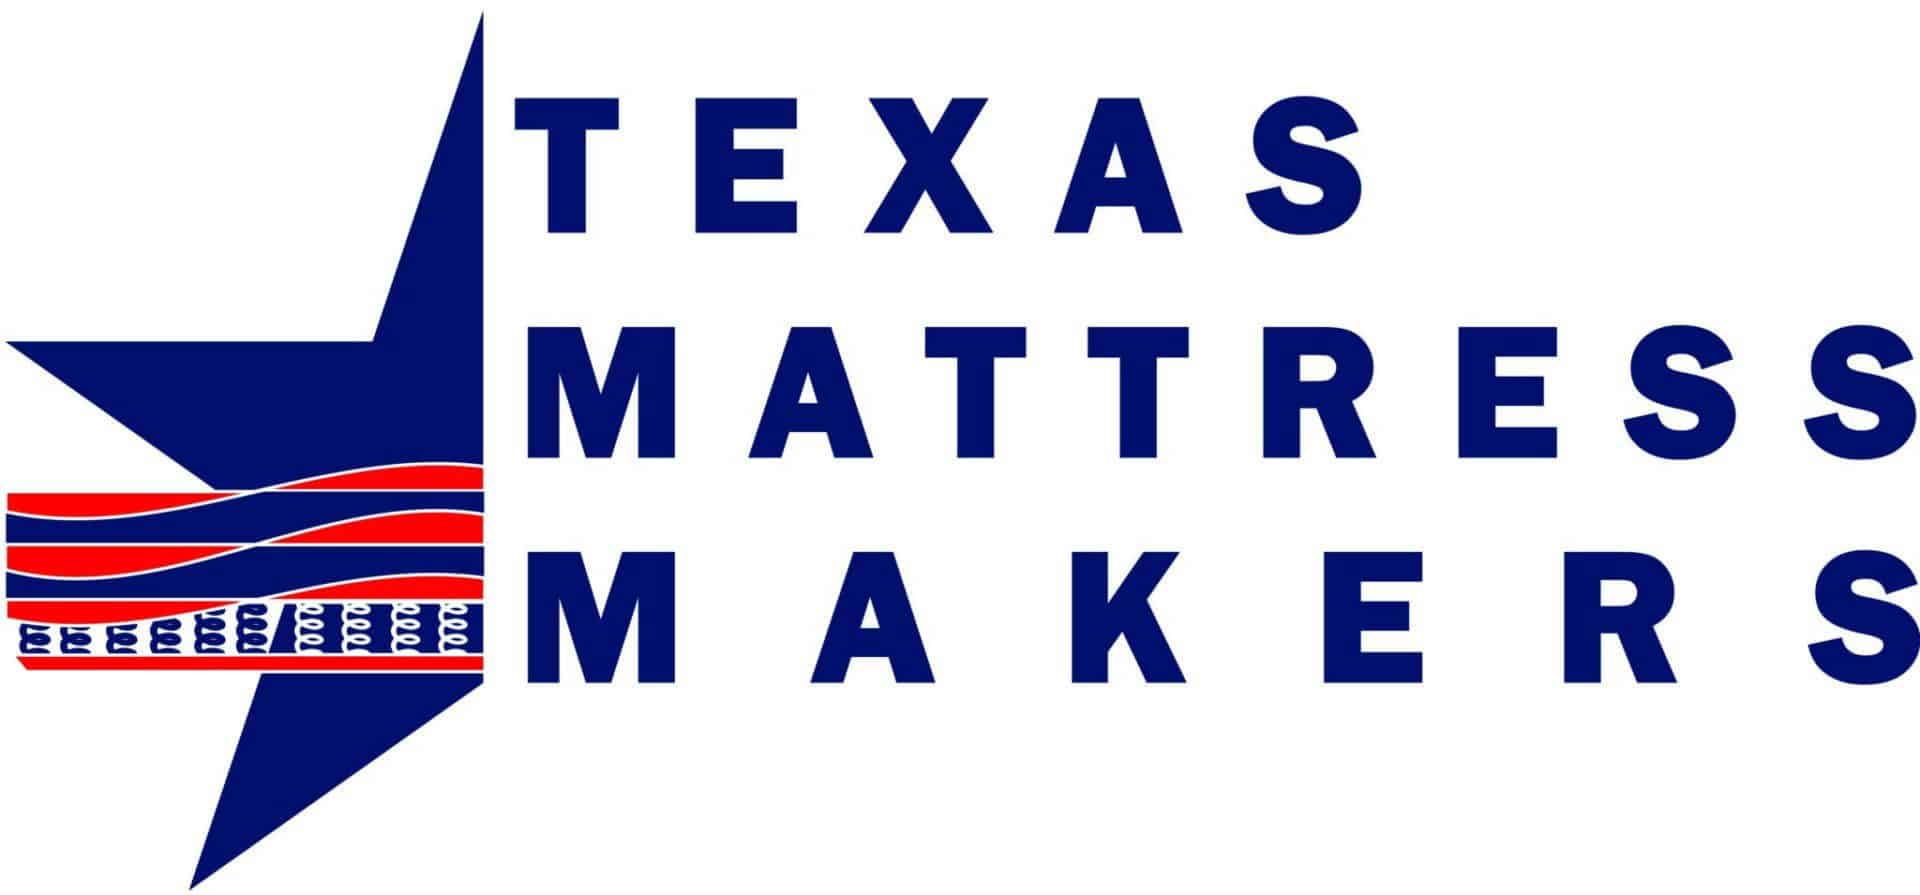 texas mattress makers furniture store